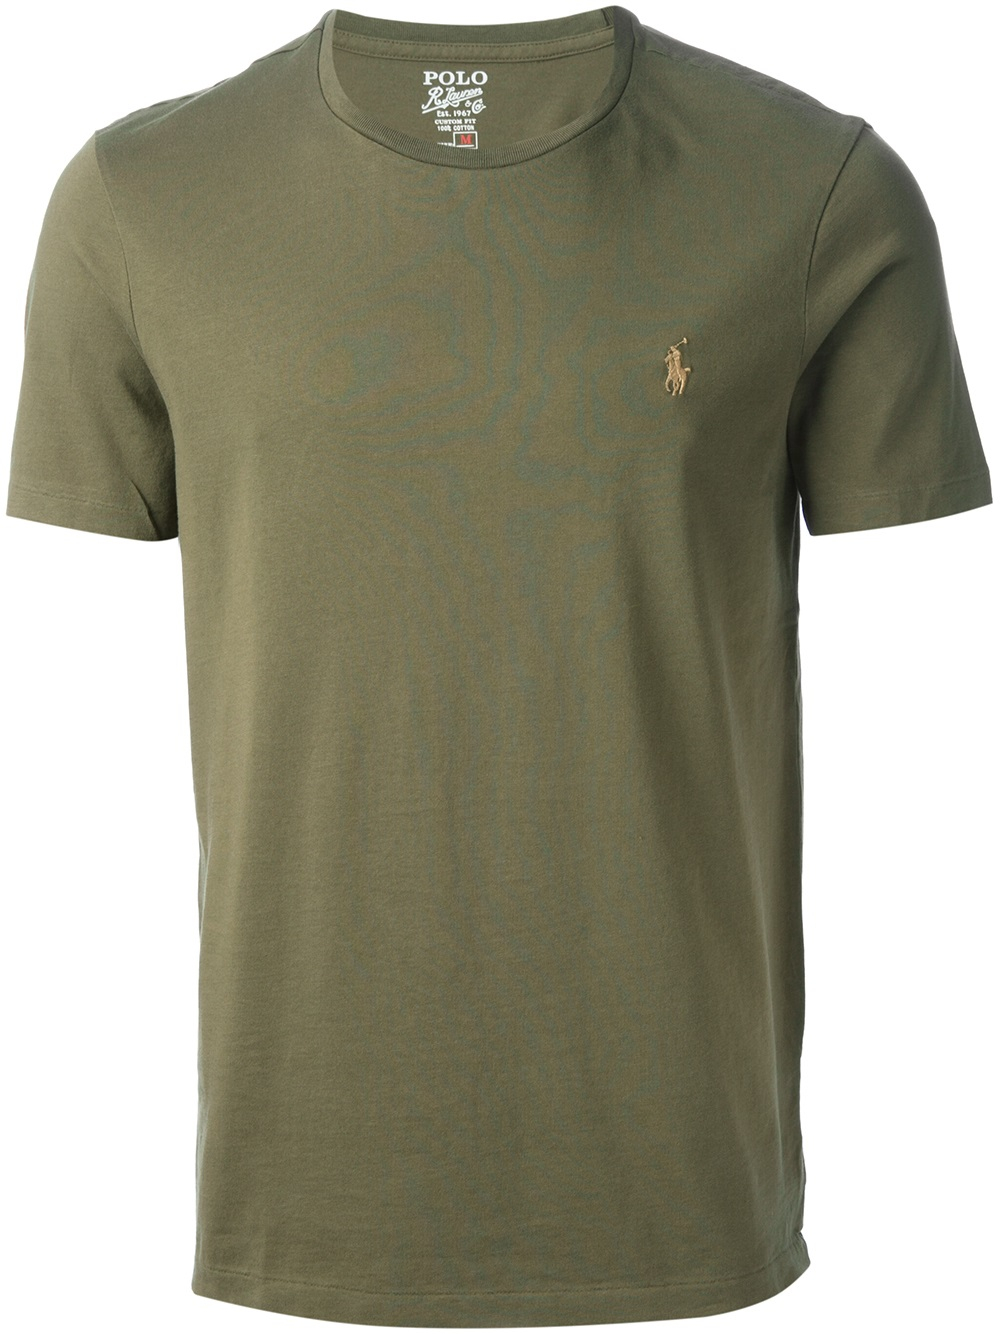 Lyst - Polo Ralph Lauren Custom Fit Tshirt in Green for Men